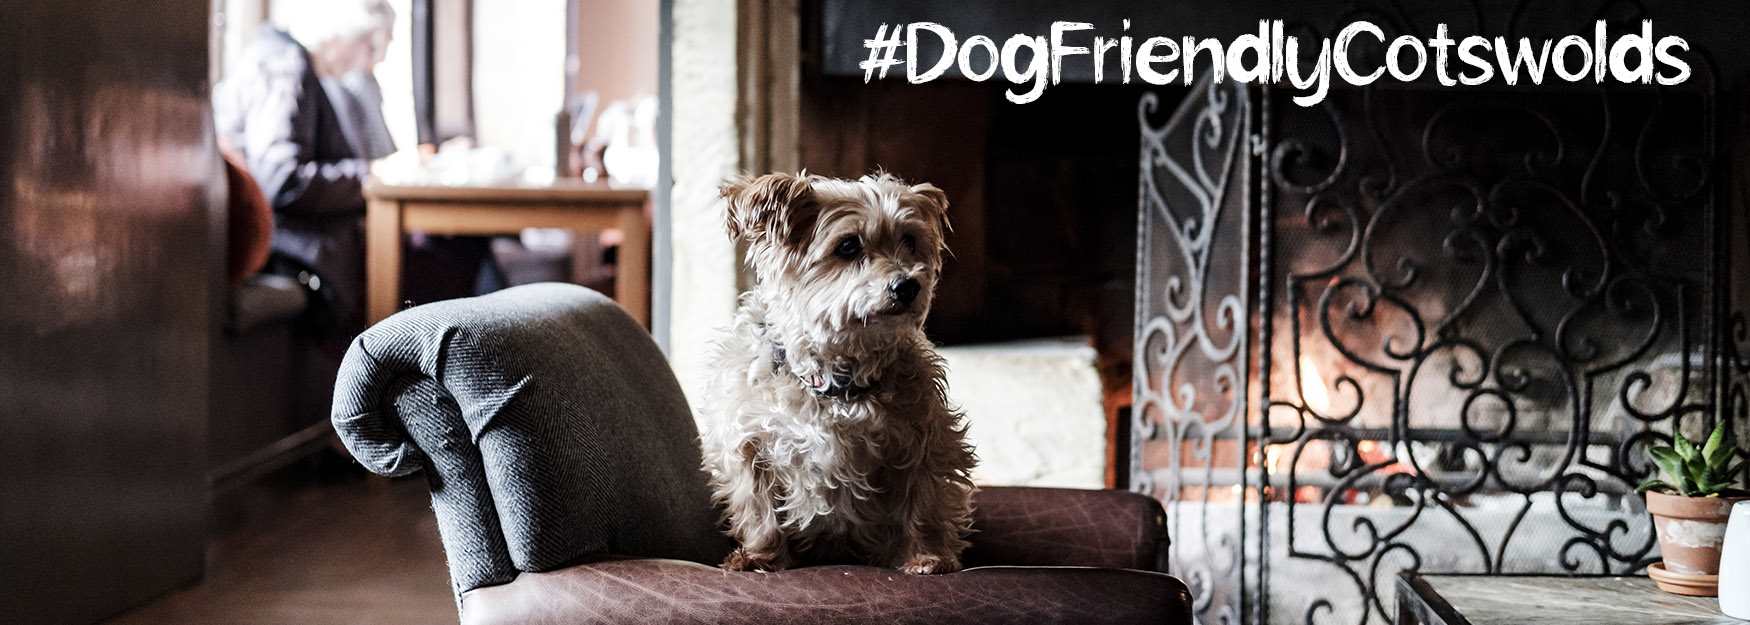 #DogFriendlyCotswolds - photo courtesy of the Bay Tree Hotel